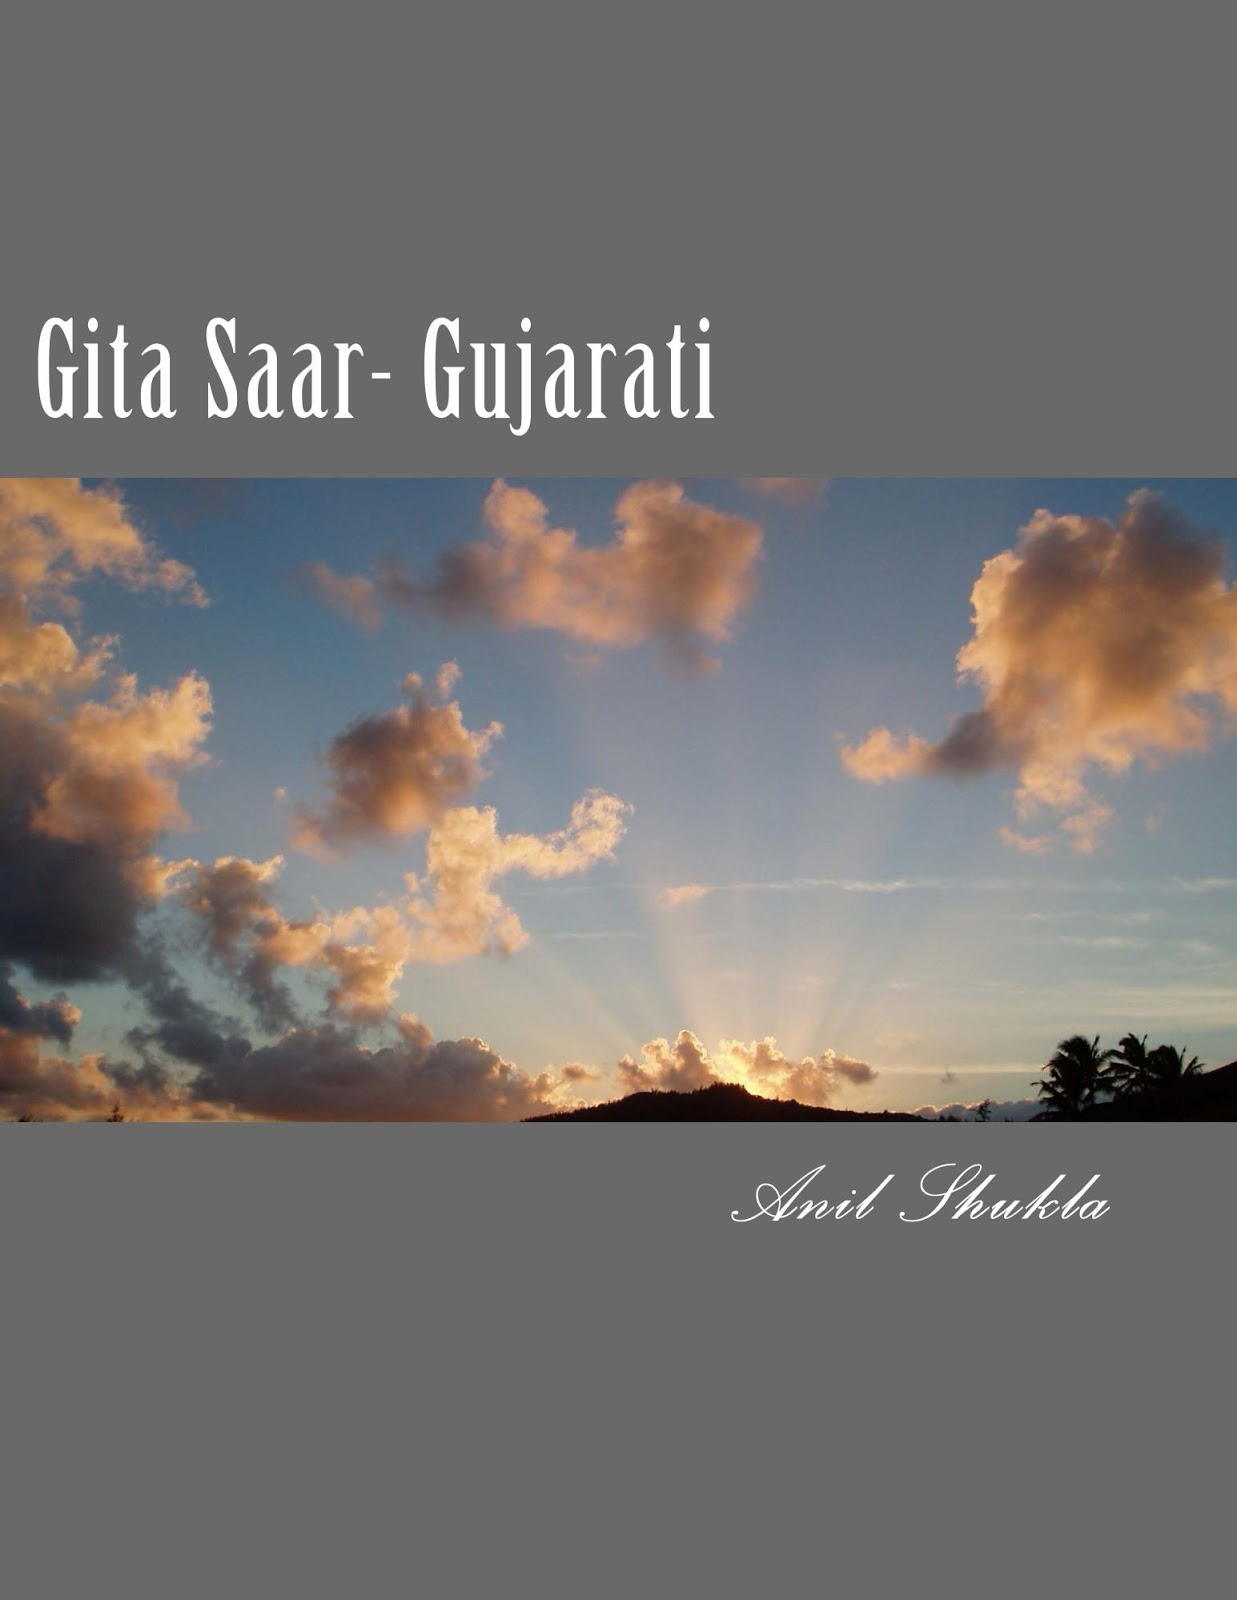 GitaSaarGujarati_Cover_.jpg